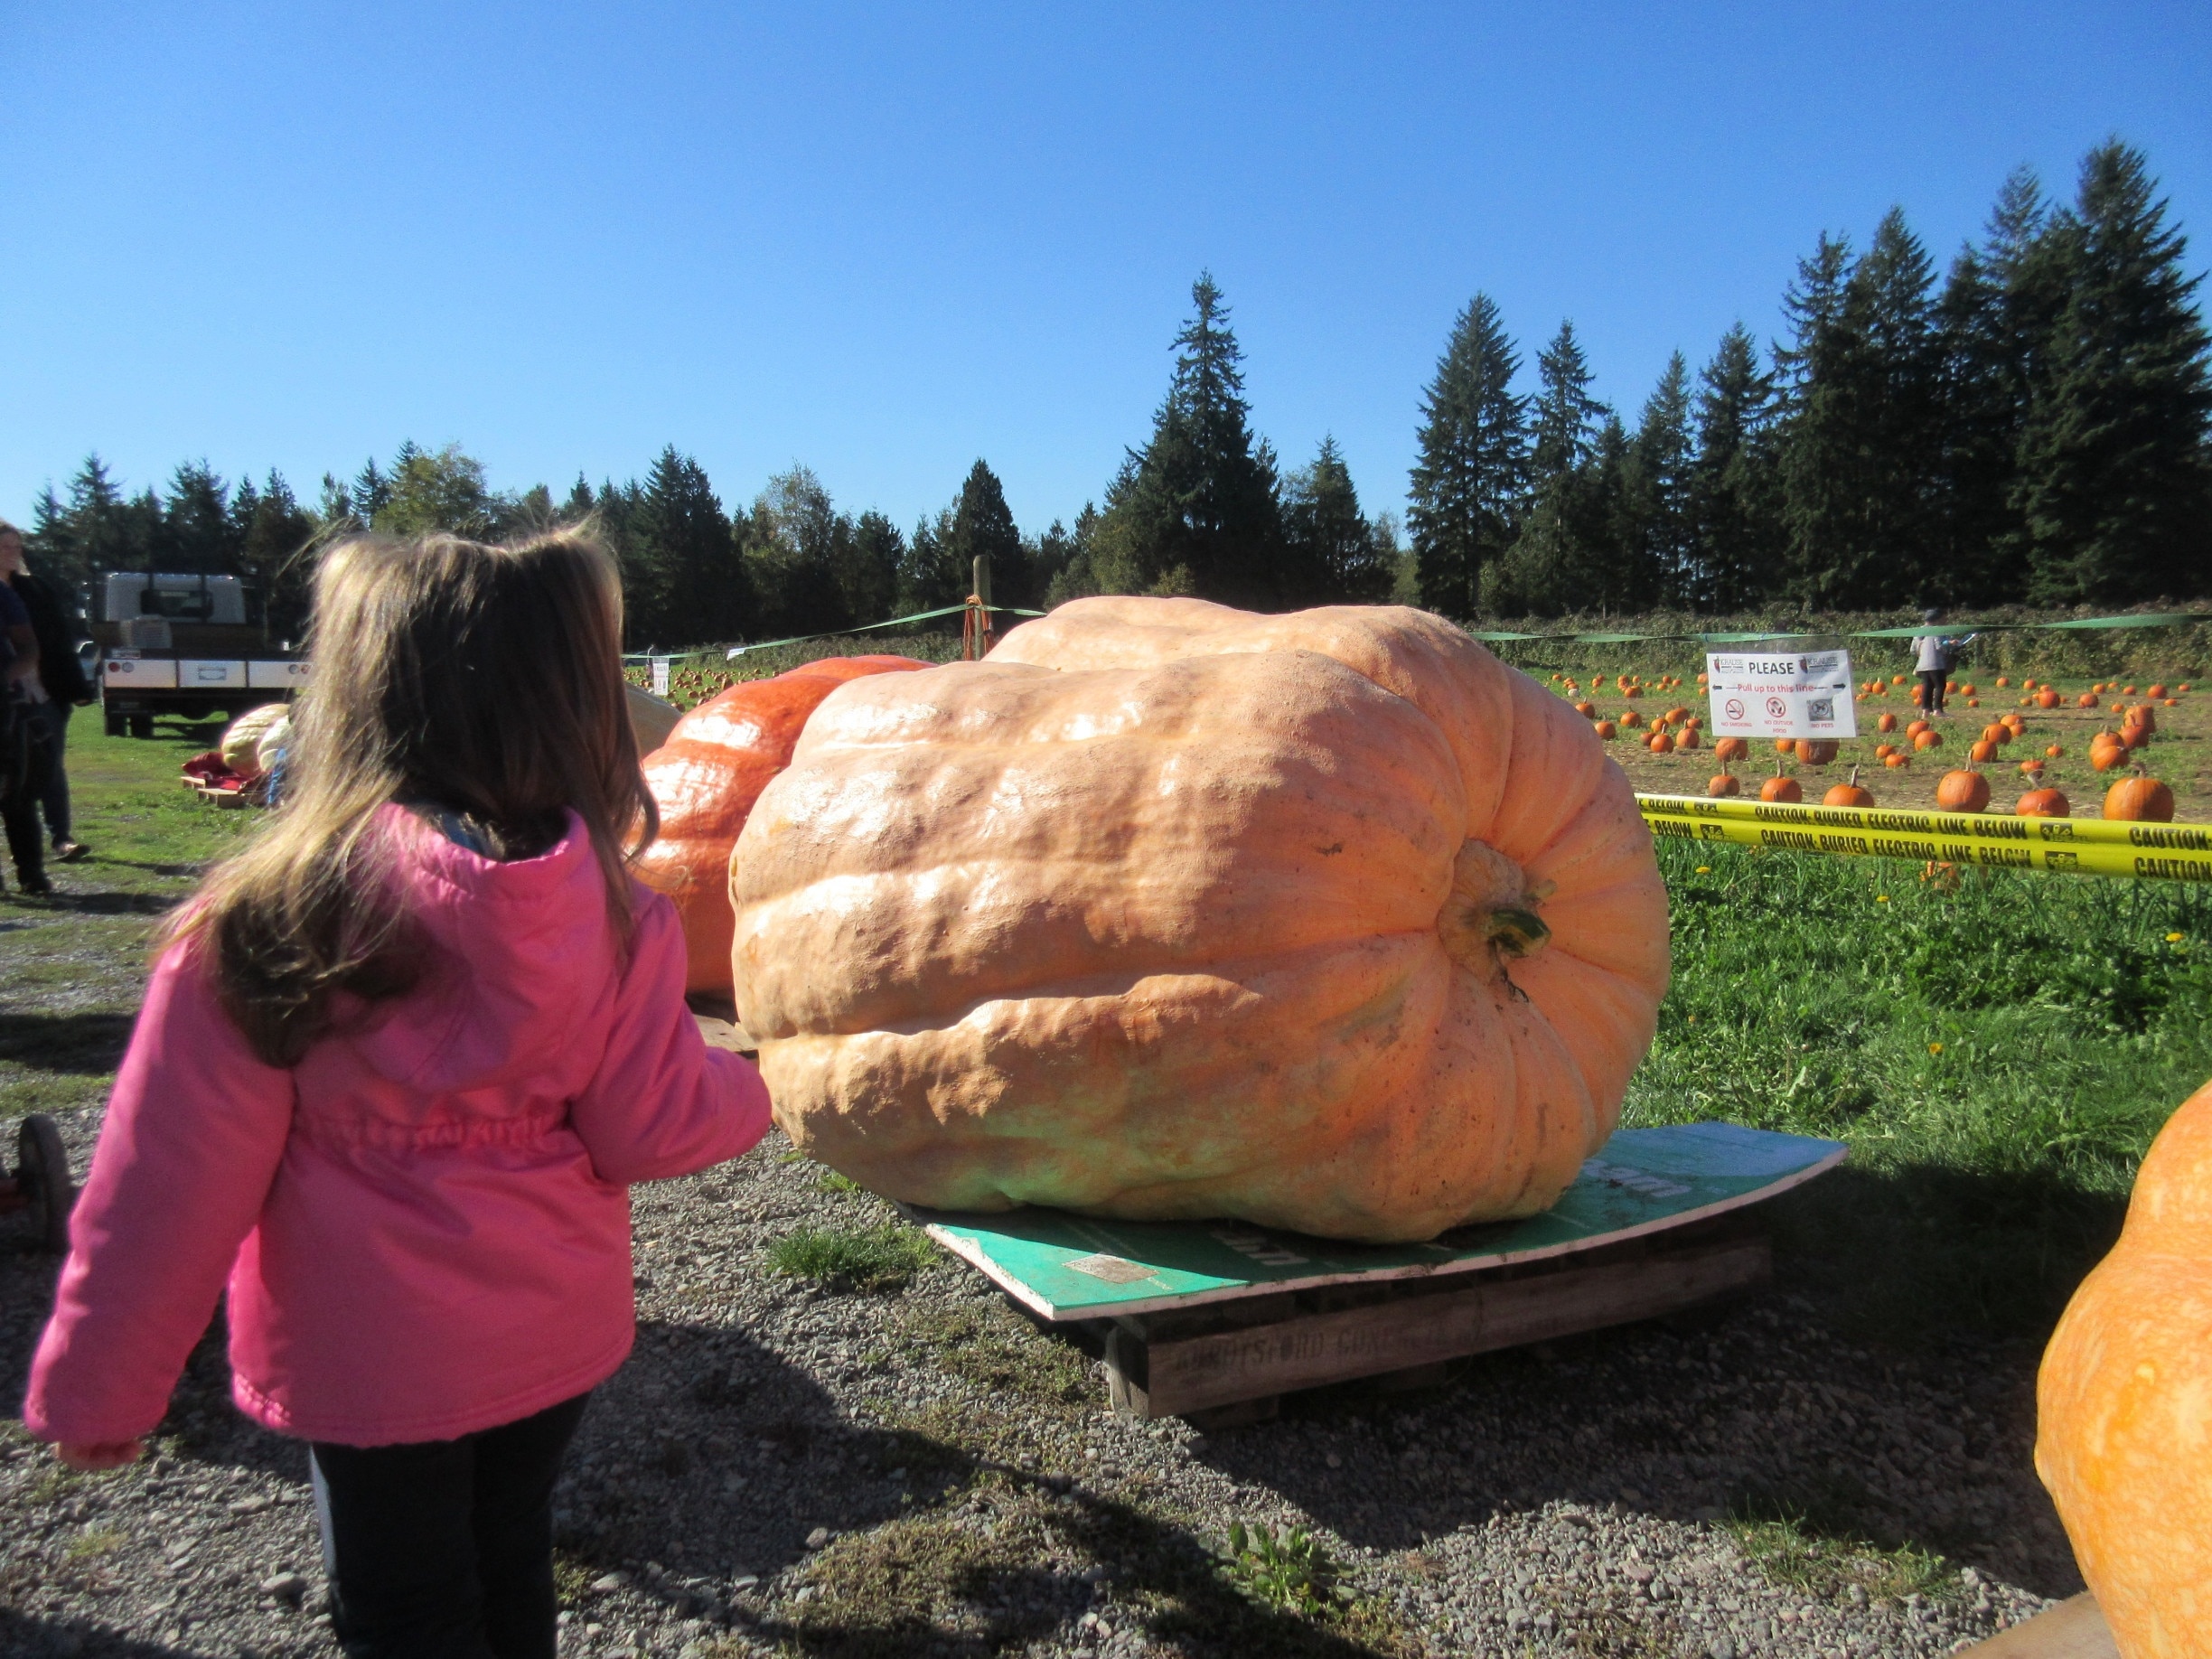 pretty big for a pumpkin